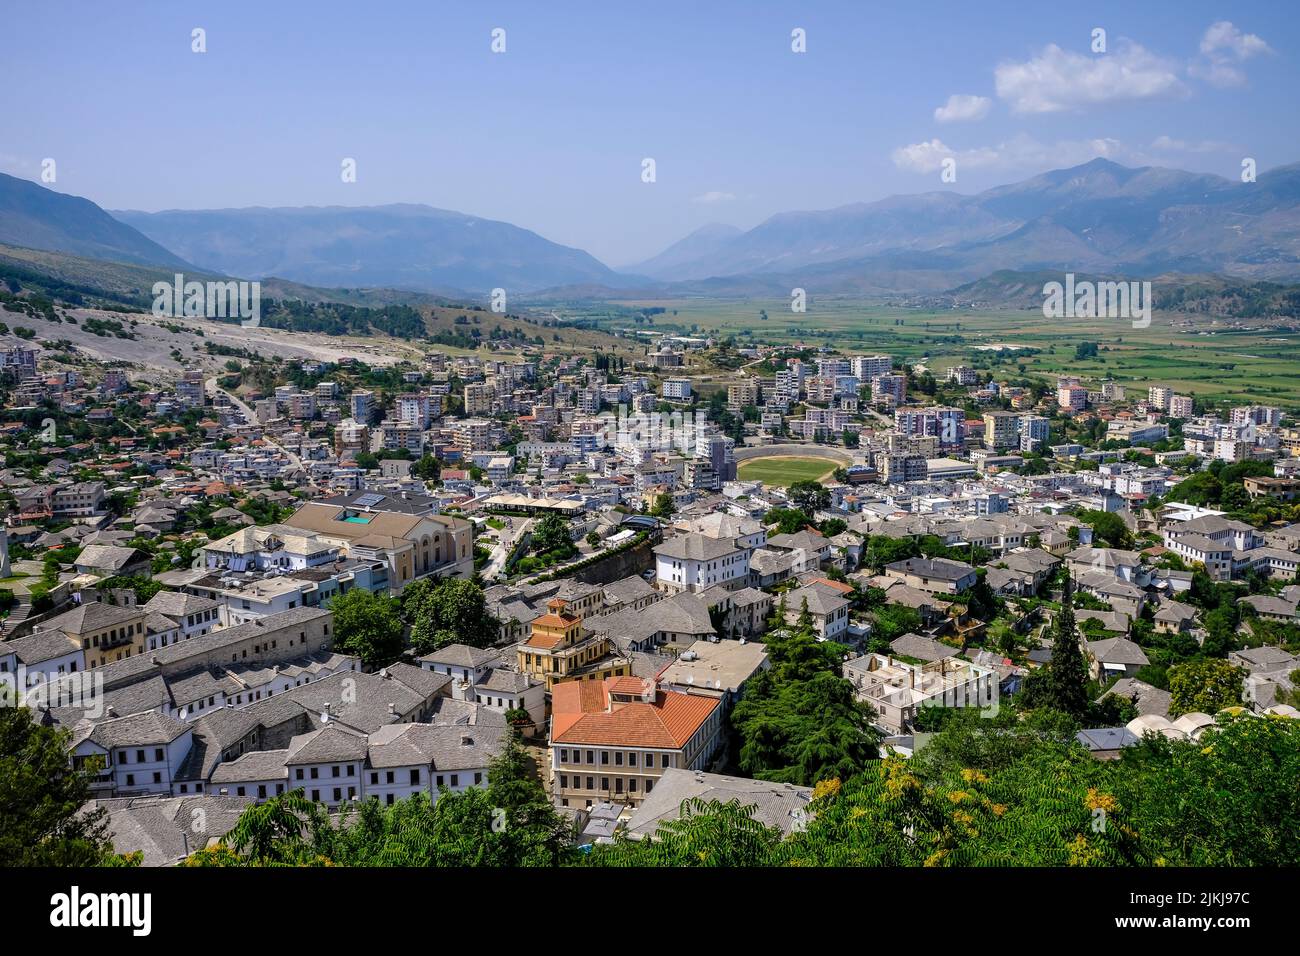 City of Gjirokastra, Gjirokastra, Albania - Mountain city of Gjirokastra, UNESCO World Heritage Site. City view with mountains in Drinos valley. Stock Photo